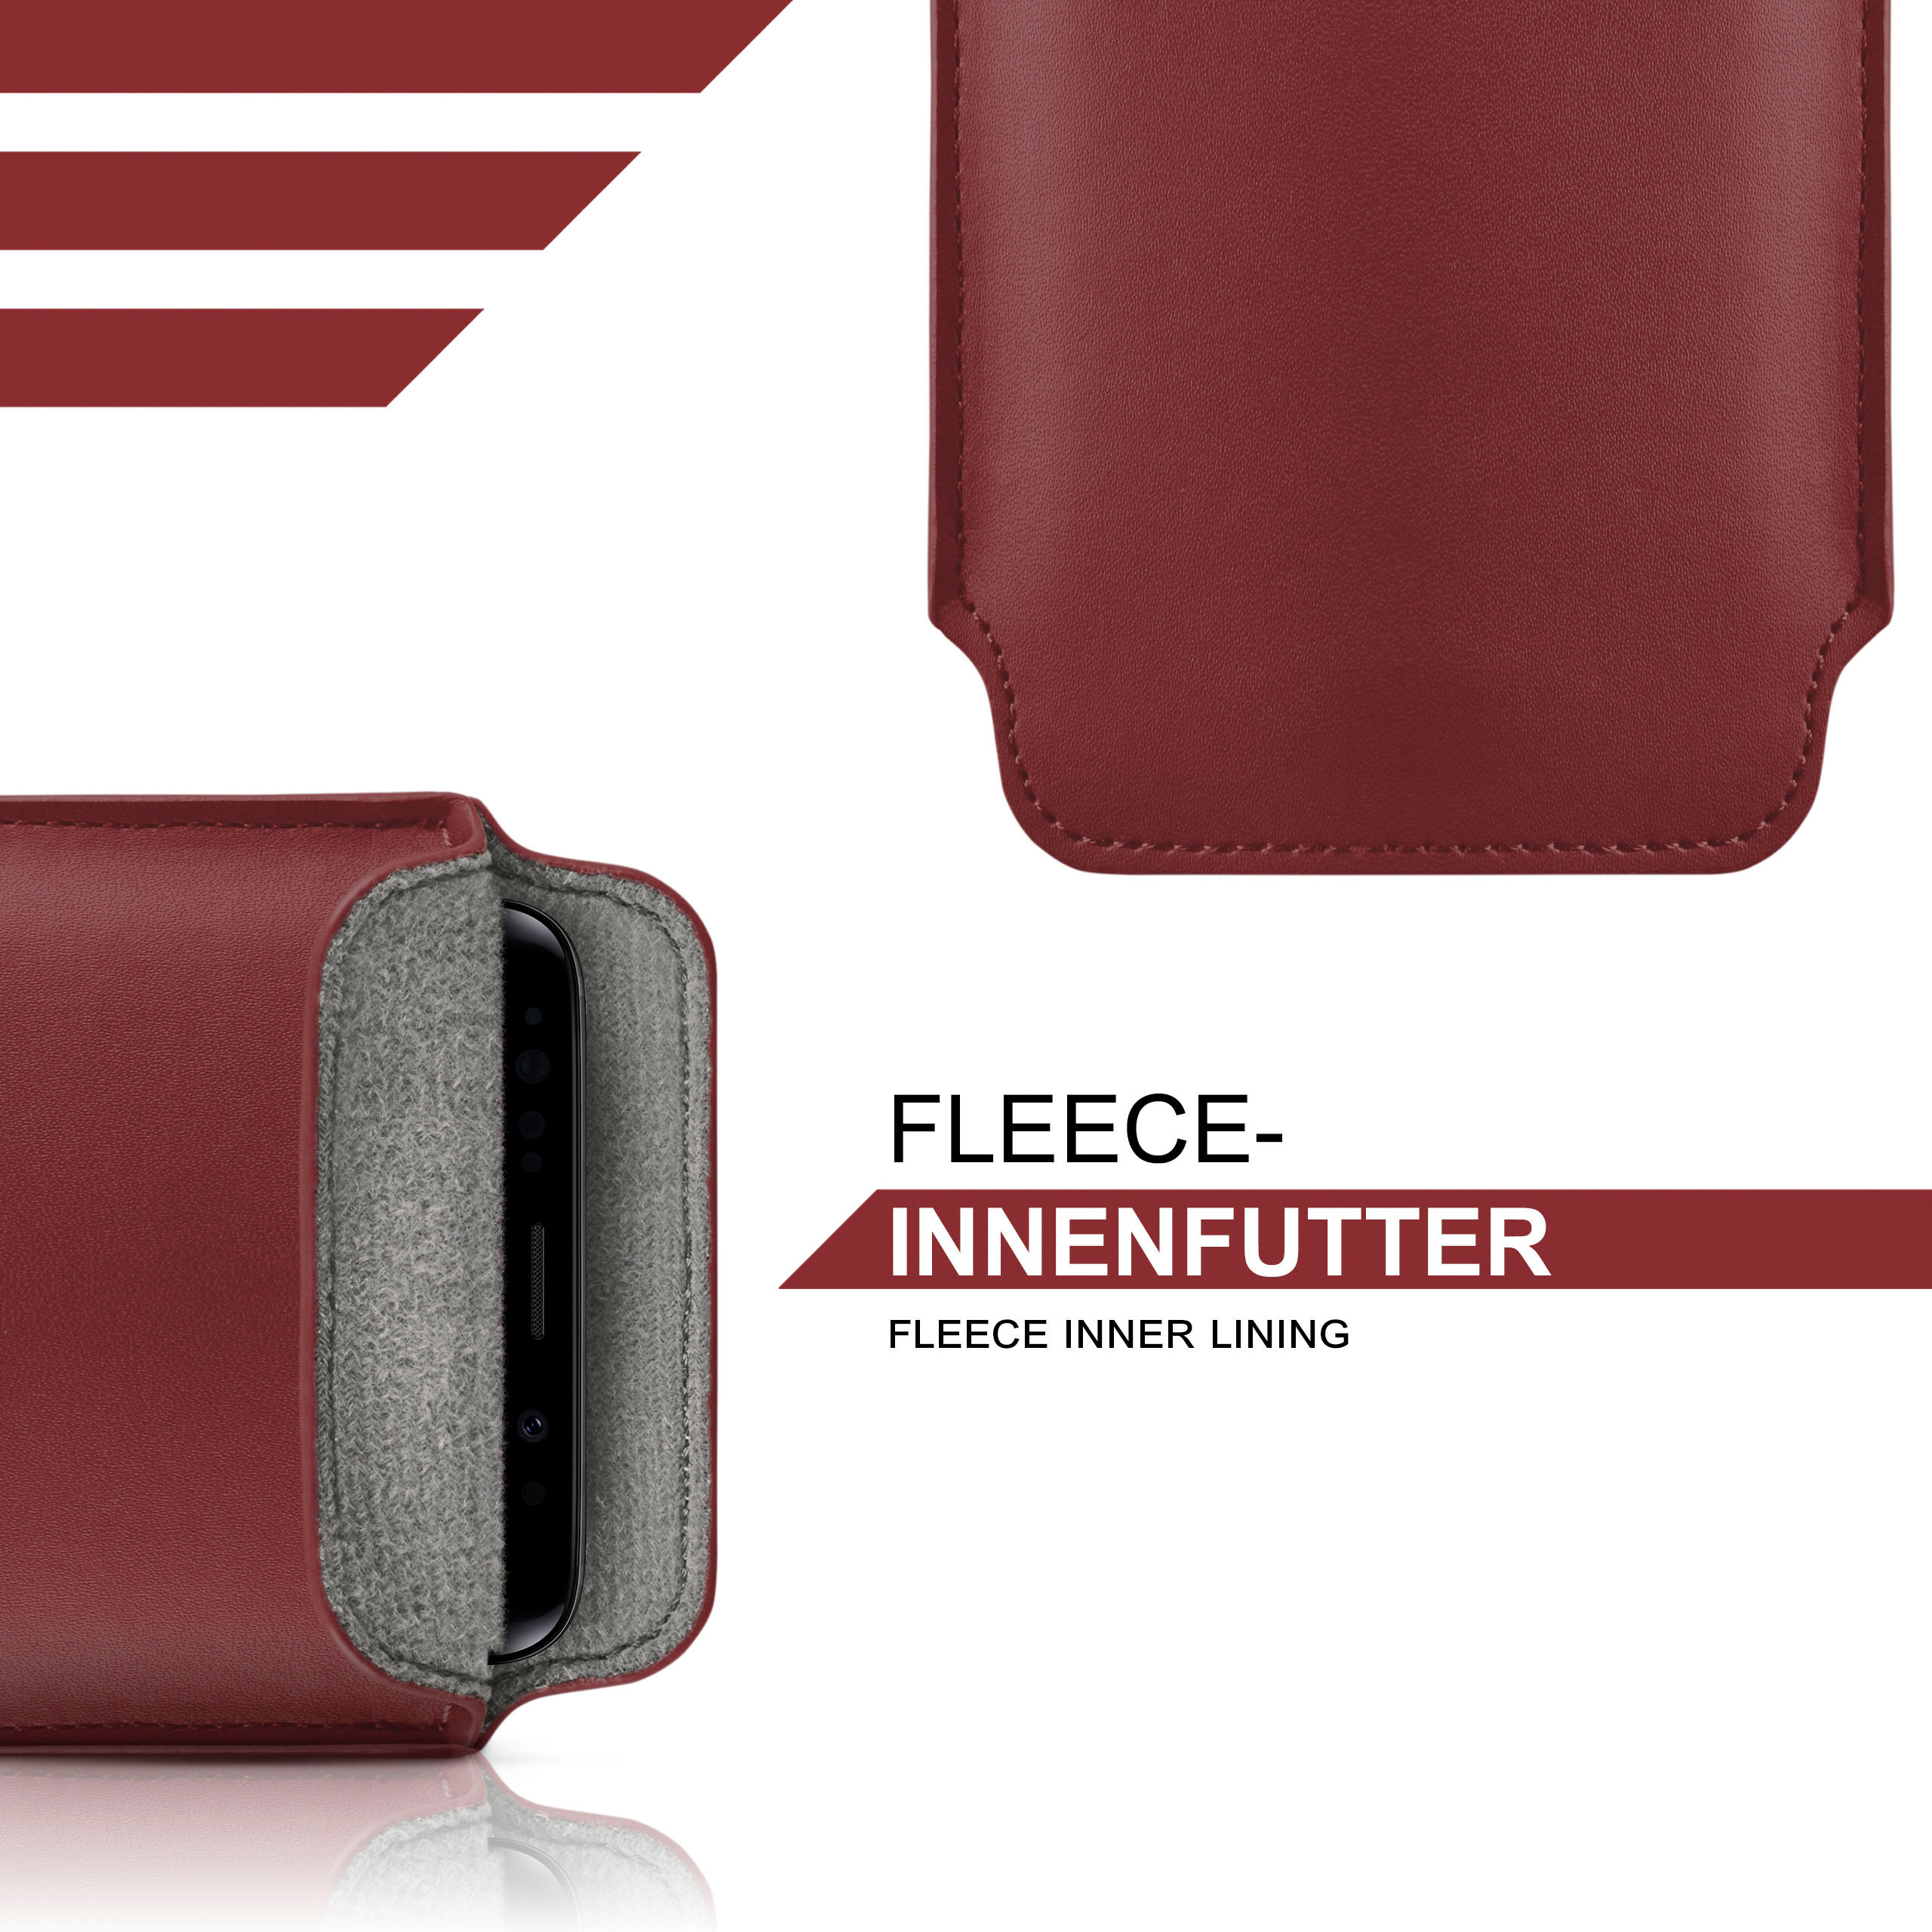 MOEX Slide Case, Full Cover, Liquid Plus, Acer, Maroon-Red Zest